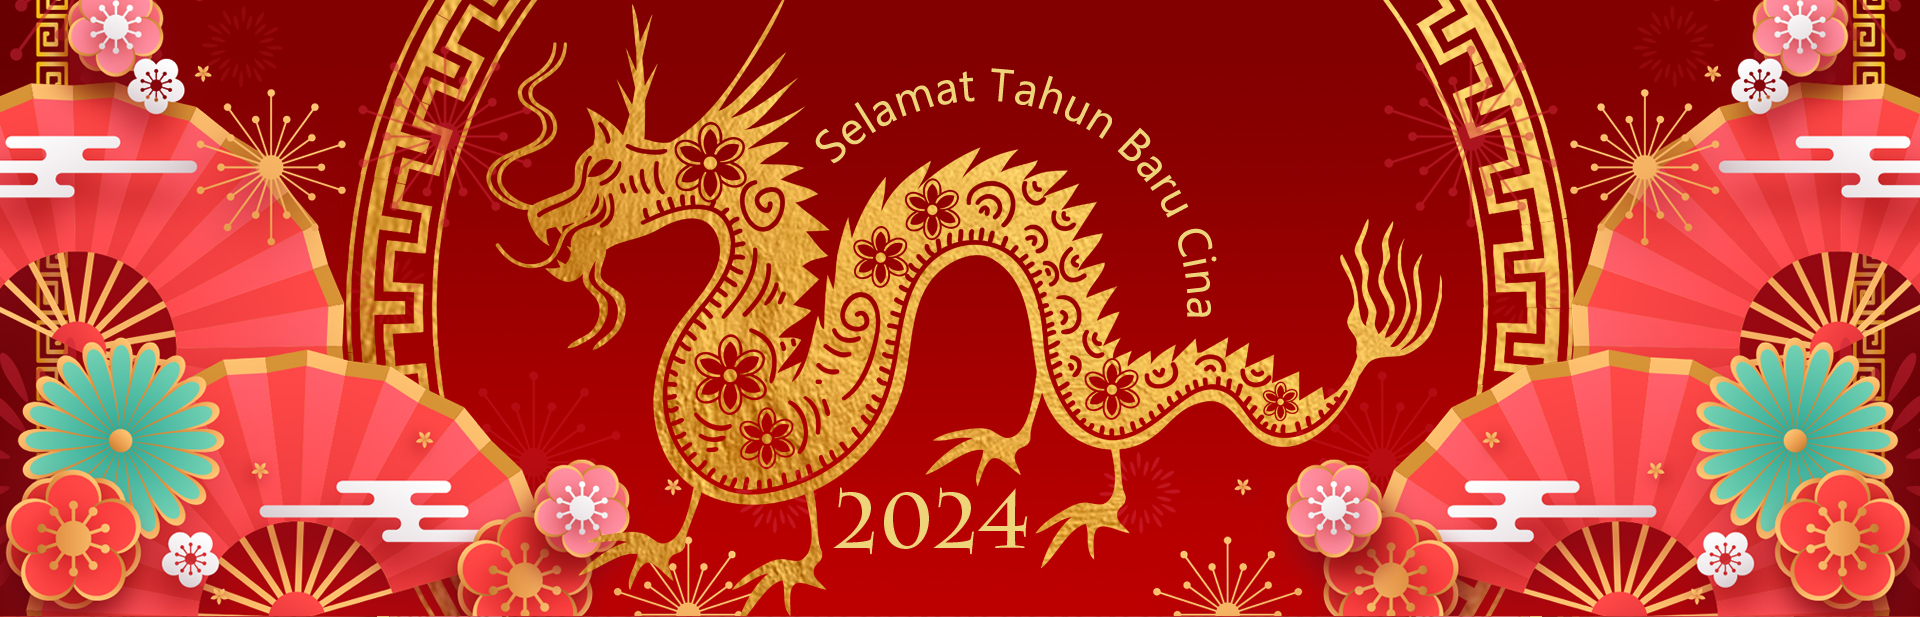 Selamat Tahun Baru Cina 2024